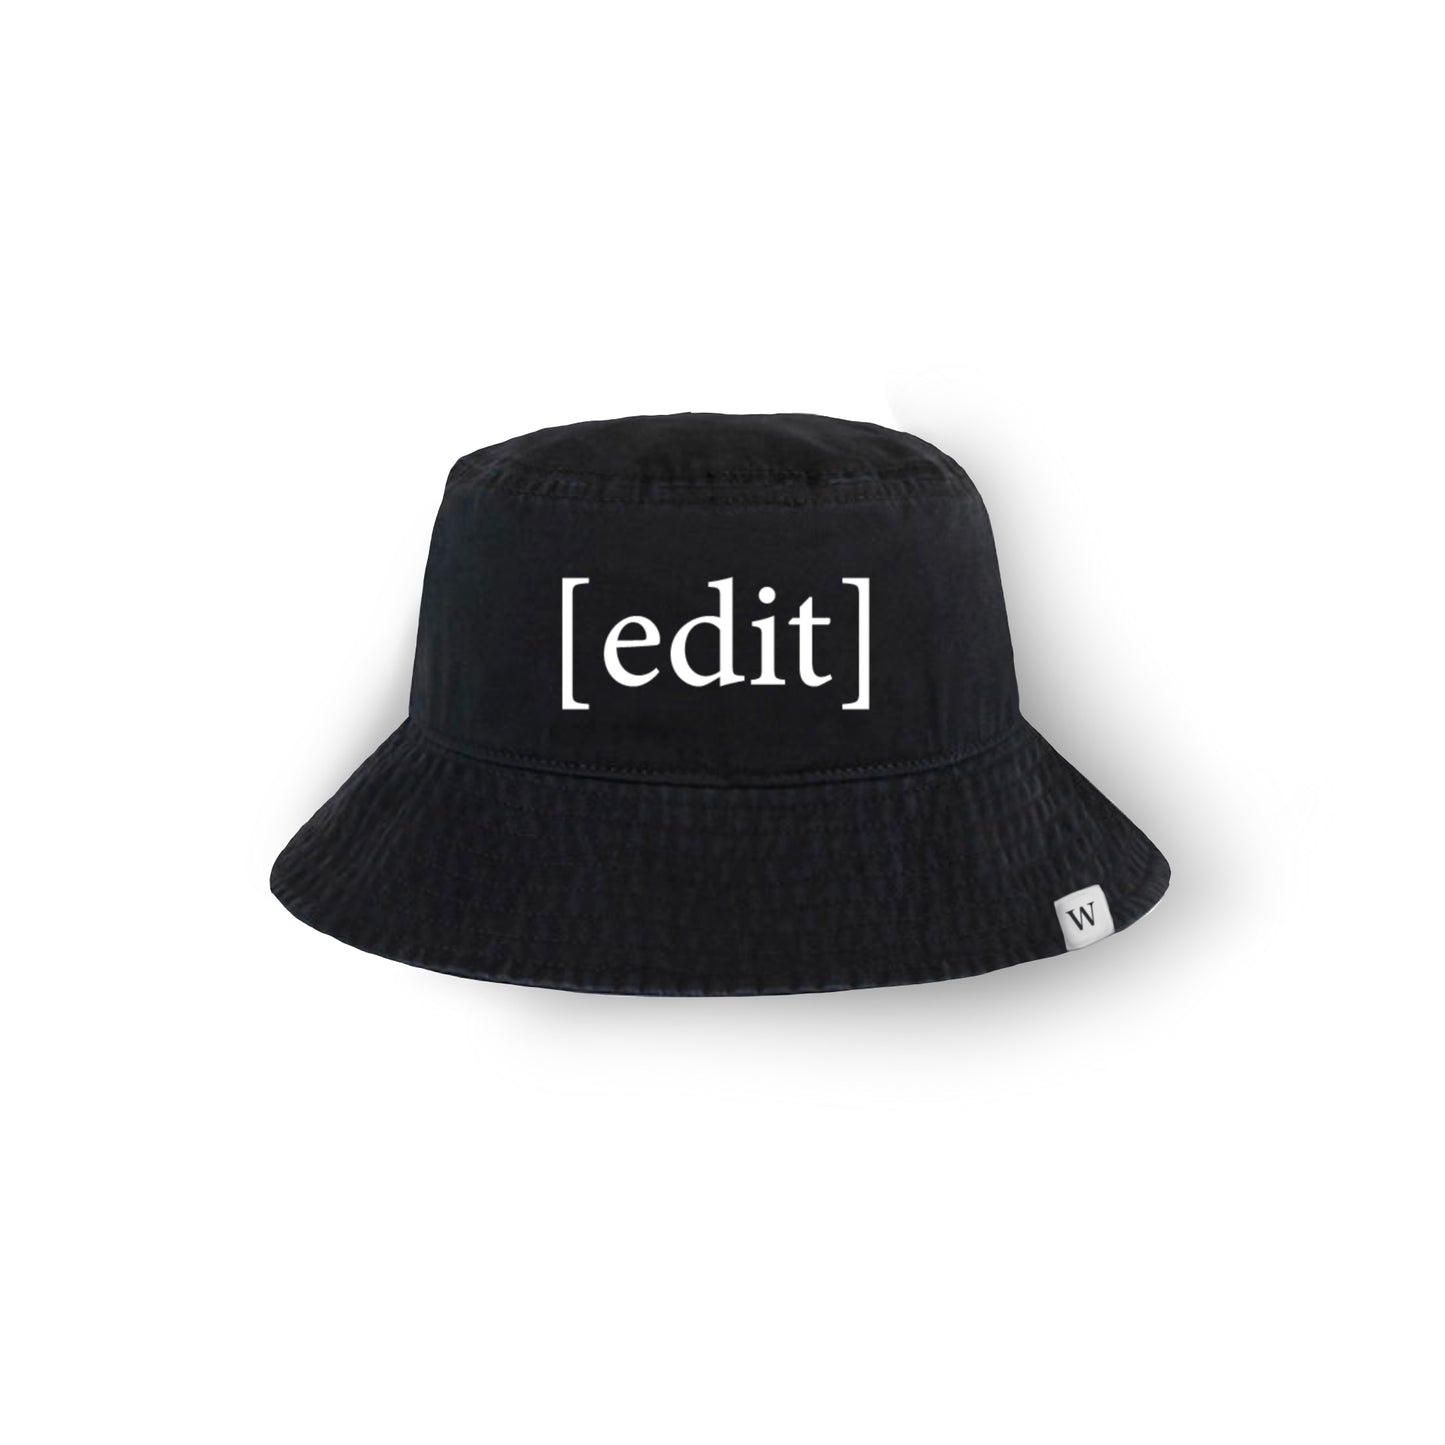 Wikipedia "Edit" Bucket Hat